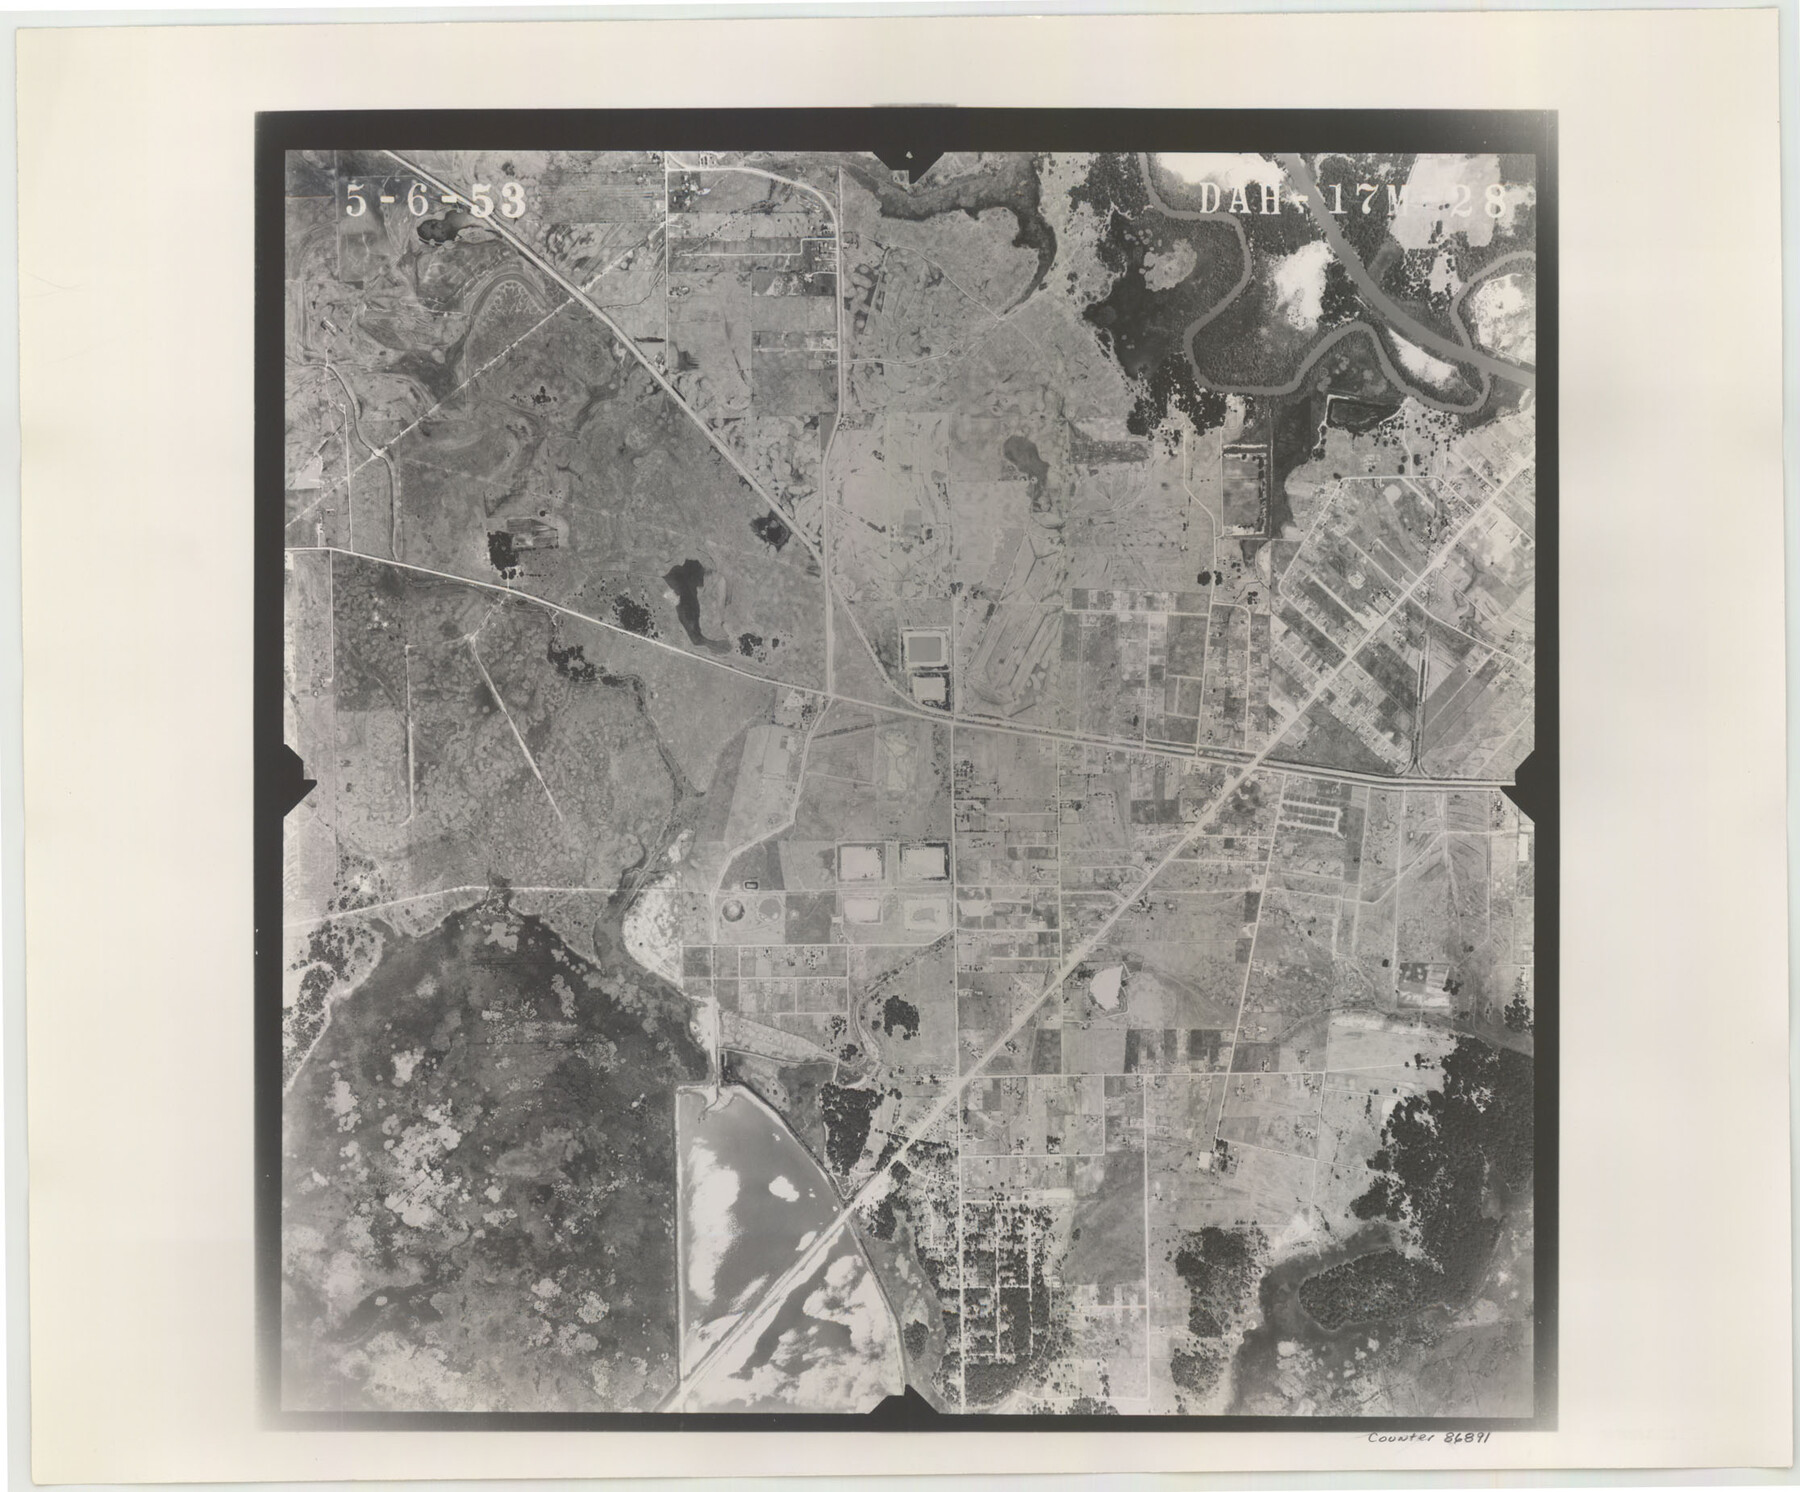 86891, Flight Mission No. DAH-17M, Frame 28, Orange County, General Map Collection